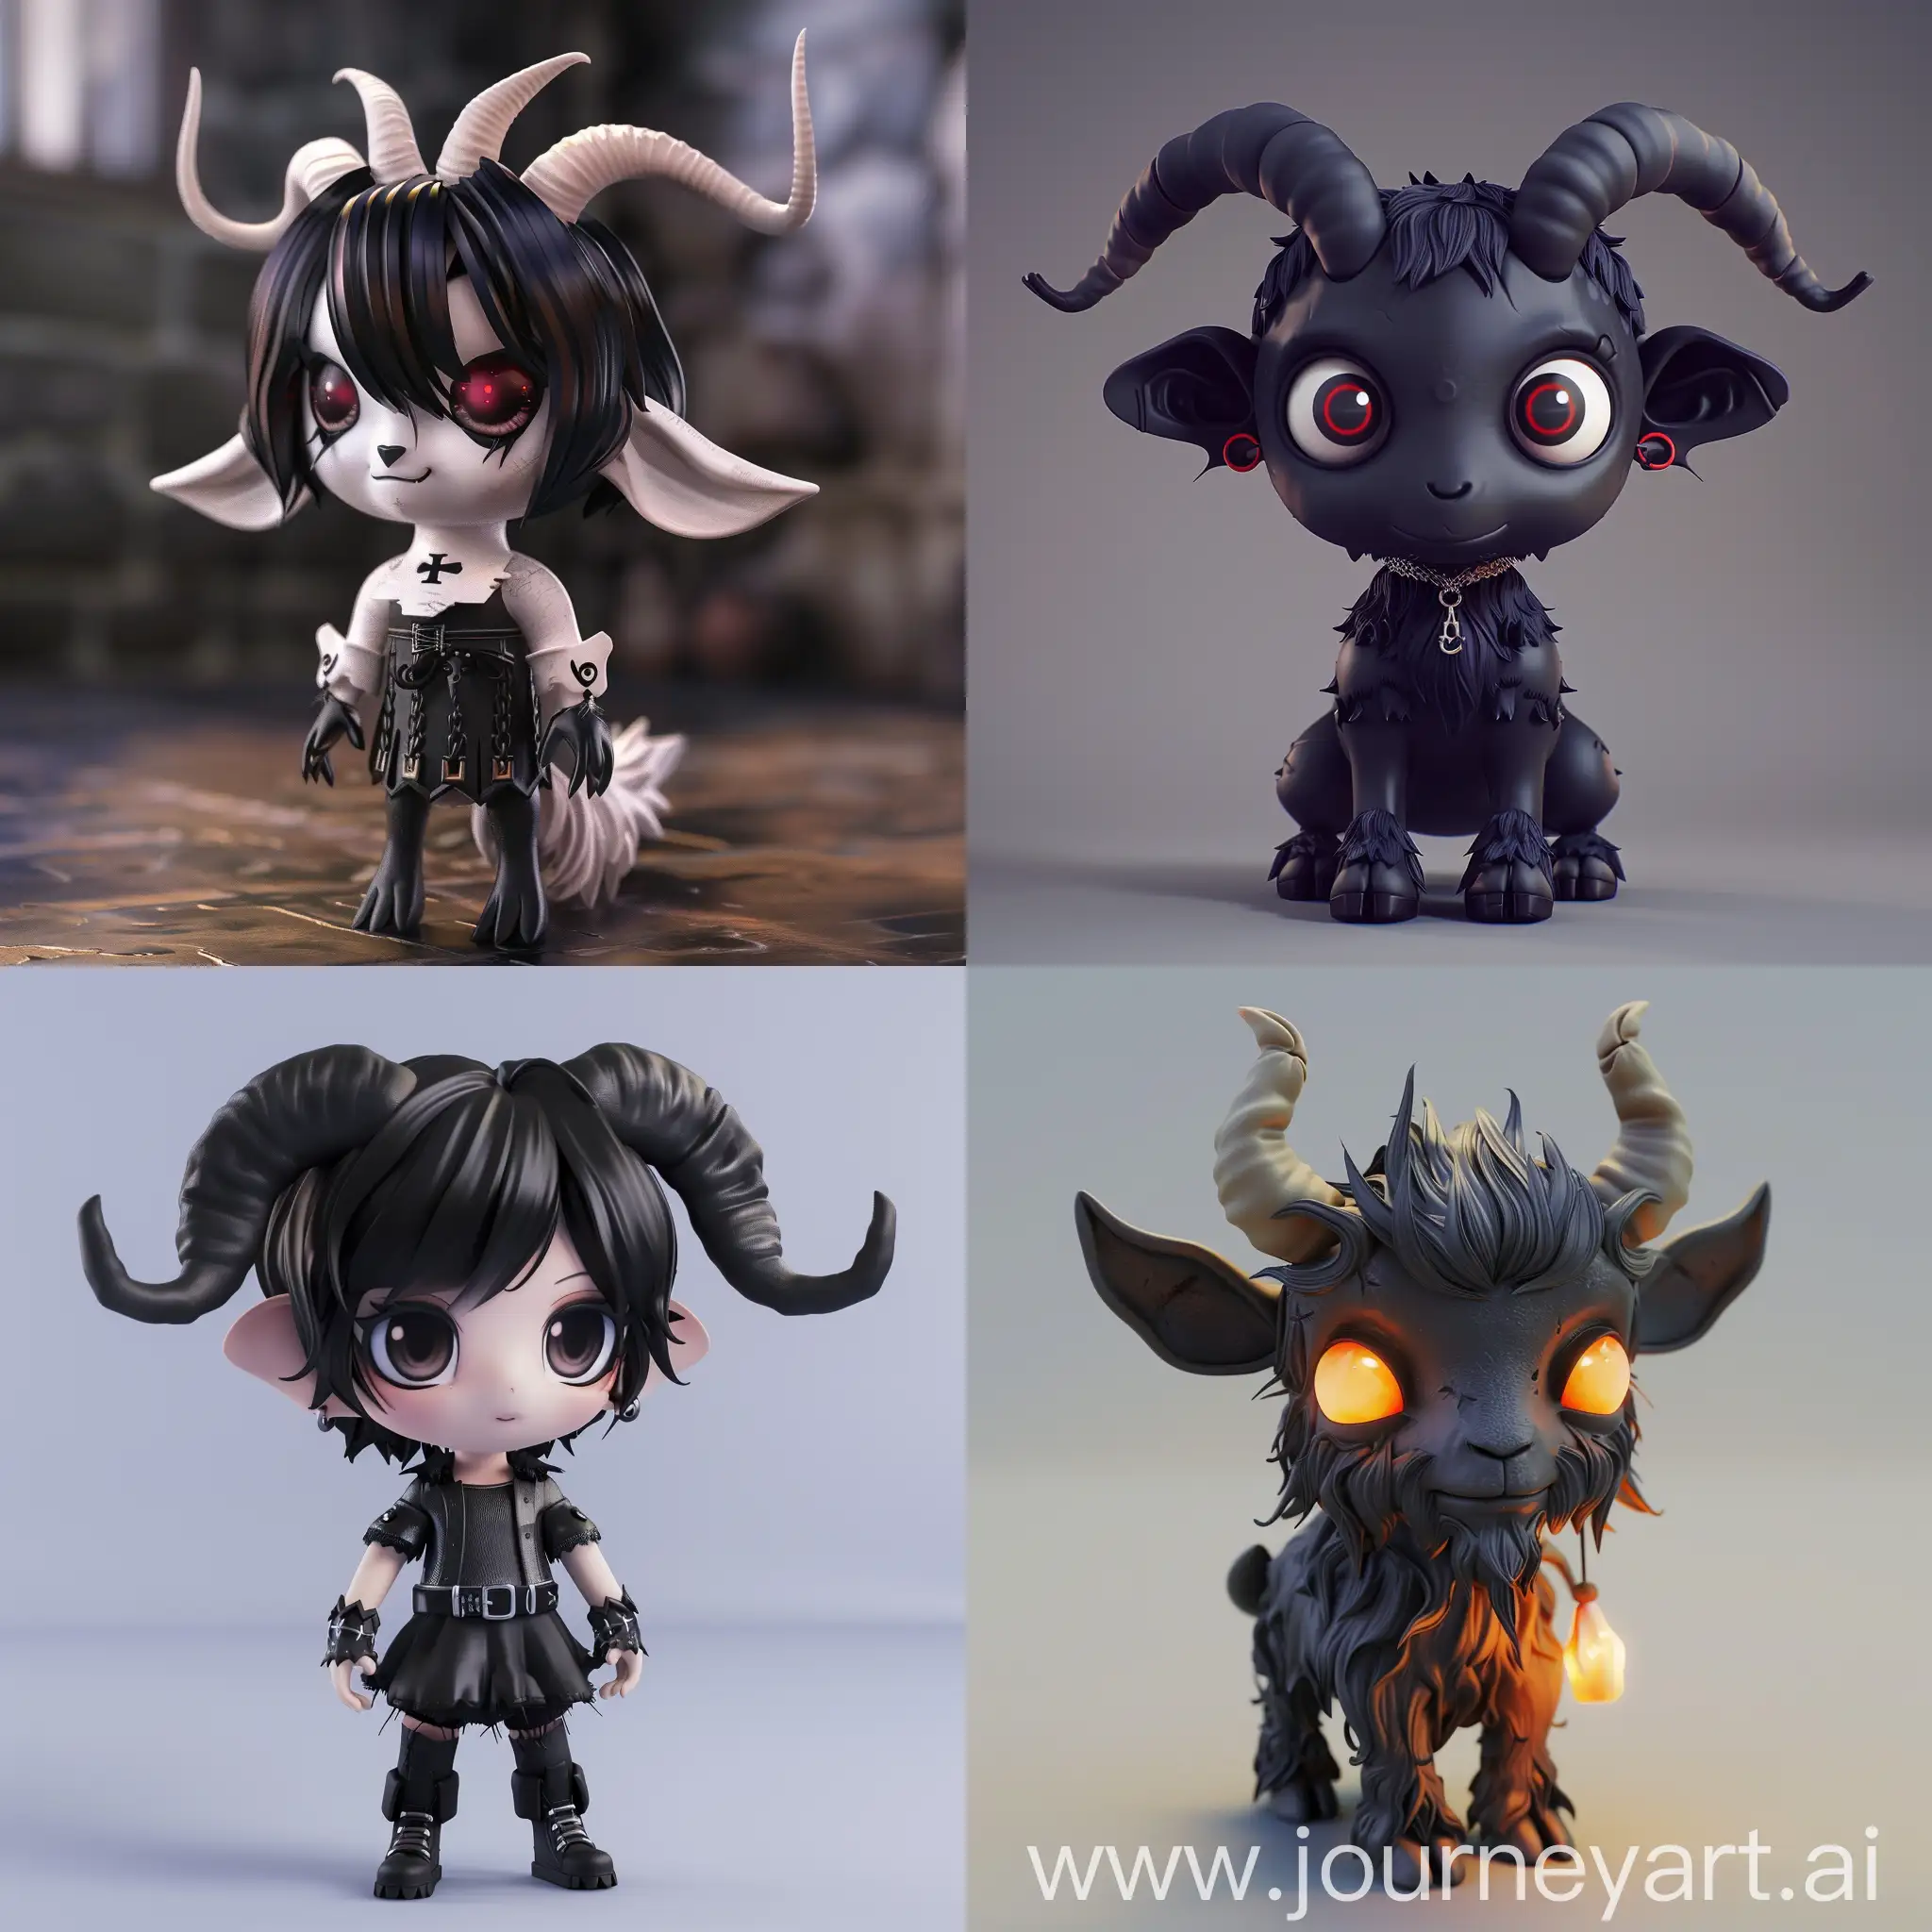 Demonic-Emo-Style-3D-Chibi-Goat-Character